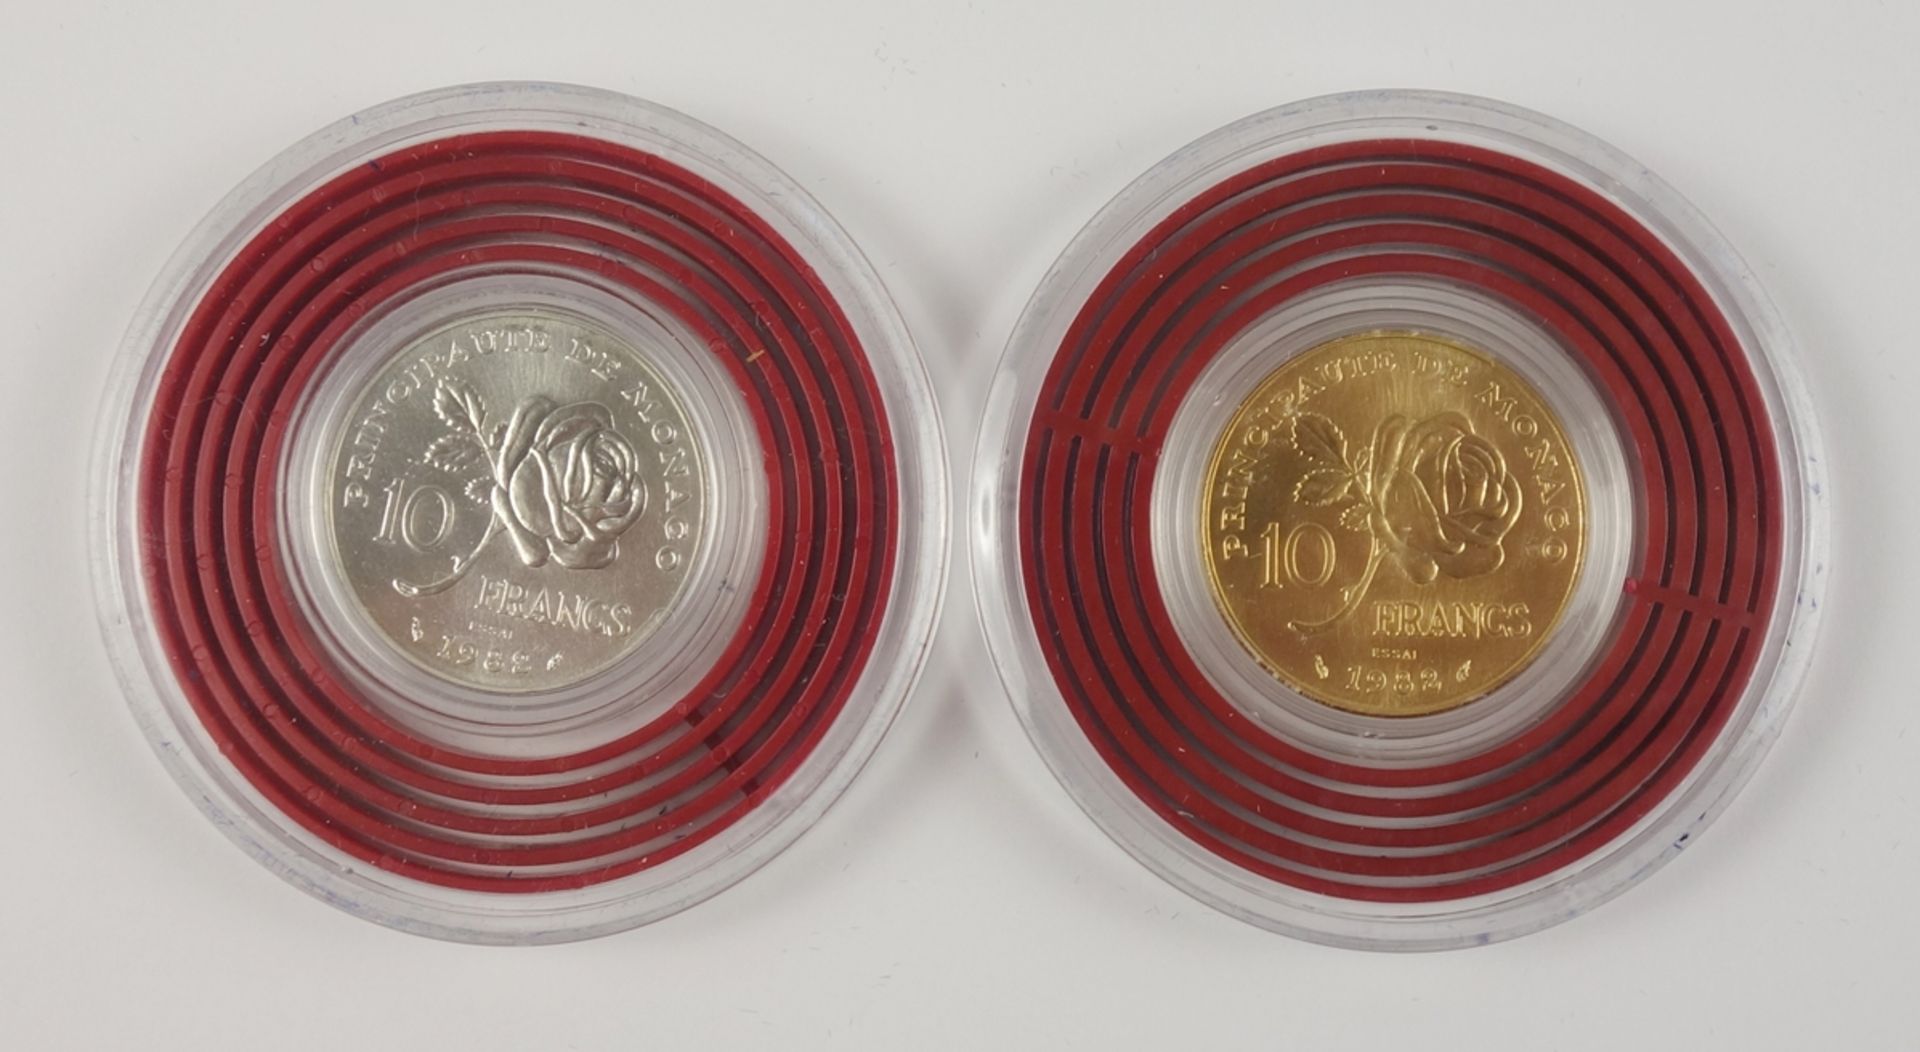 2 Medaillen, Grace Kelly, Monaco, Silber und Gold, alle in Kapsel, pp: 1982, Gr - Bild 2 aus 2